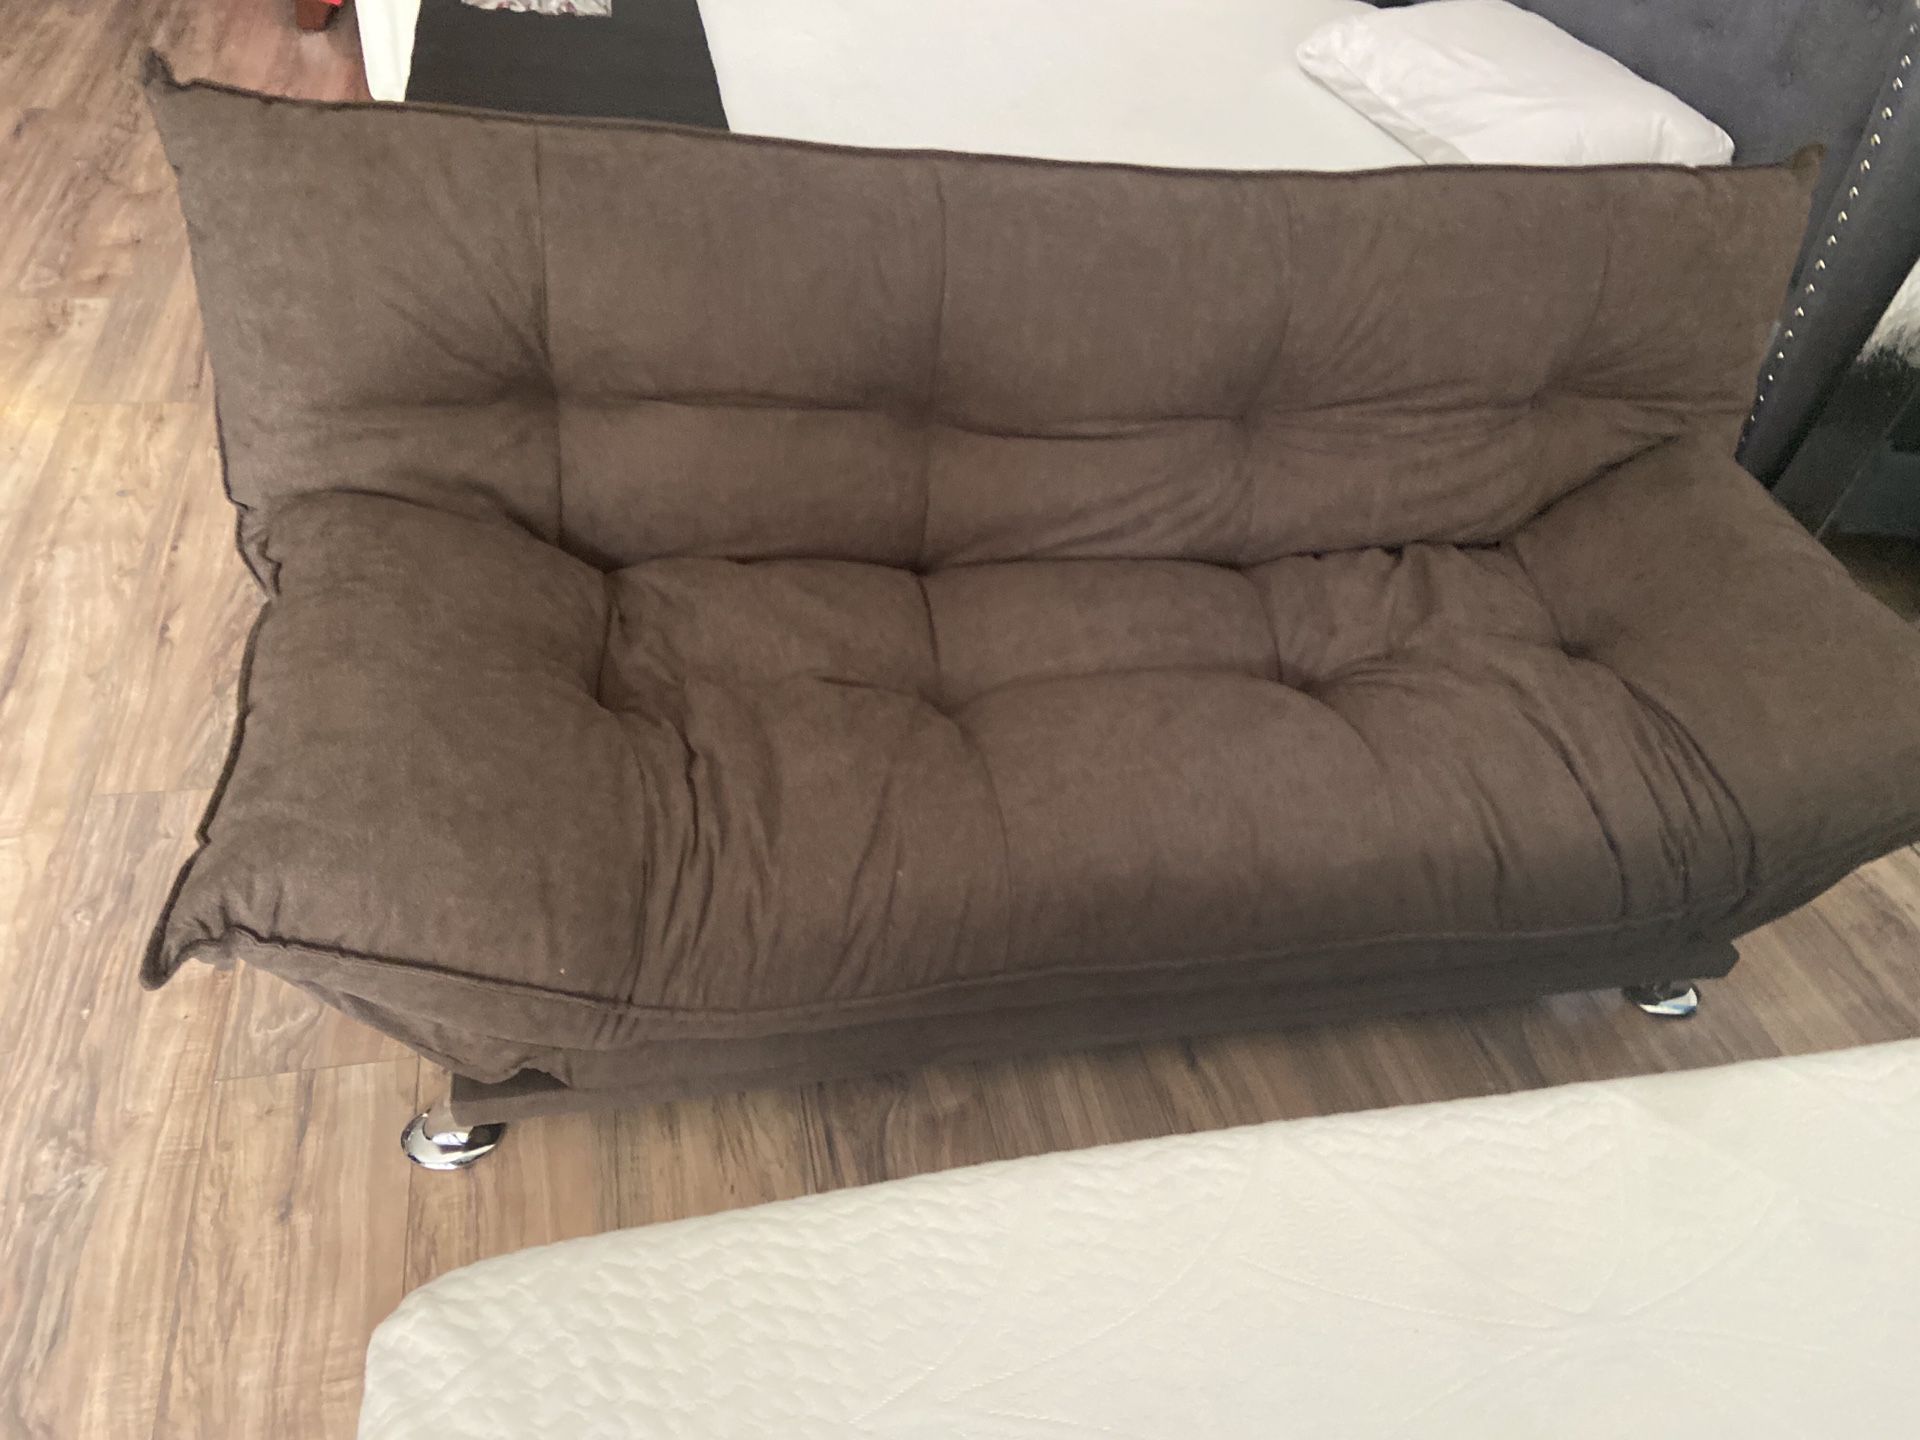 Chocalate sofa futon bed 🎈🎈🎈🎈🚚